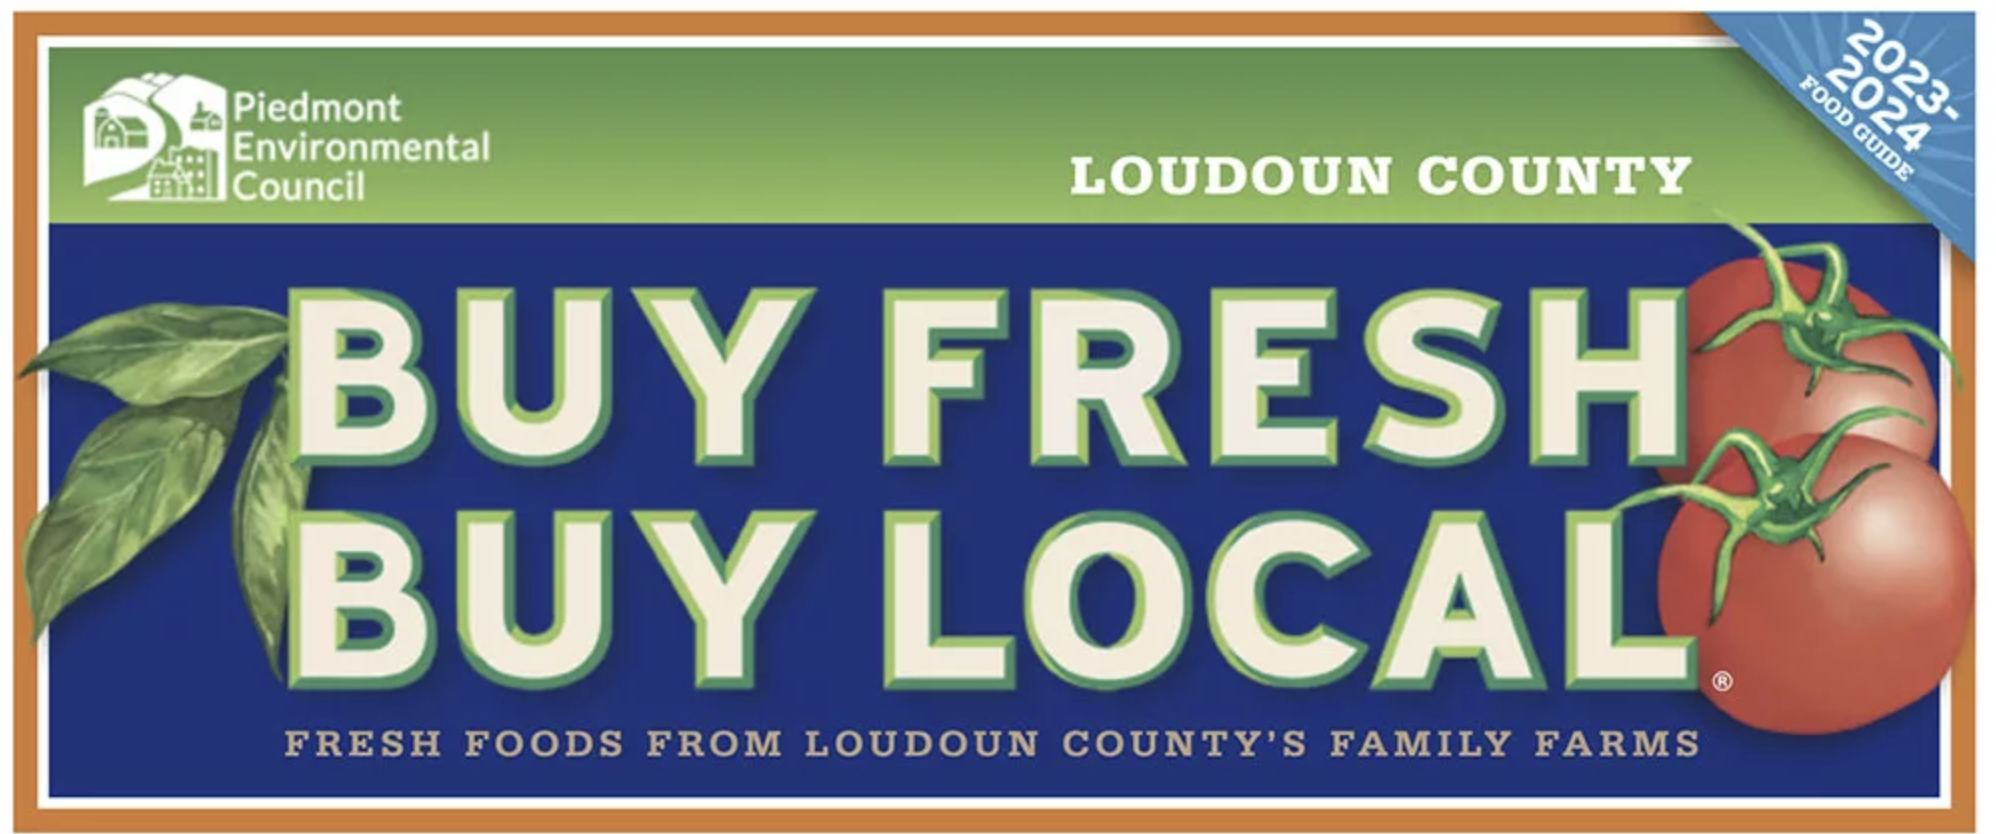 Loudoun County Guide